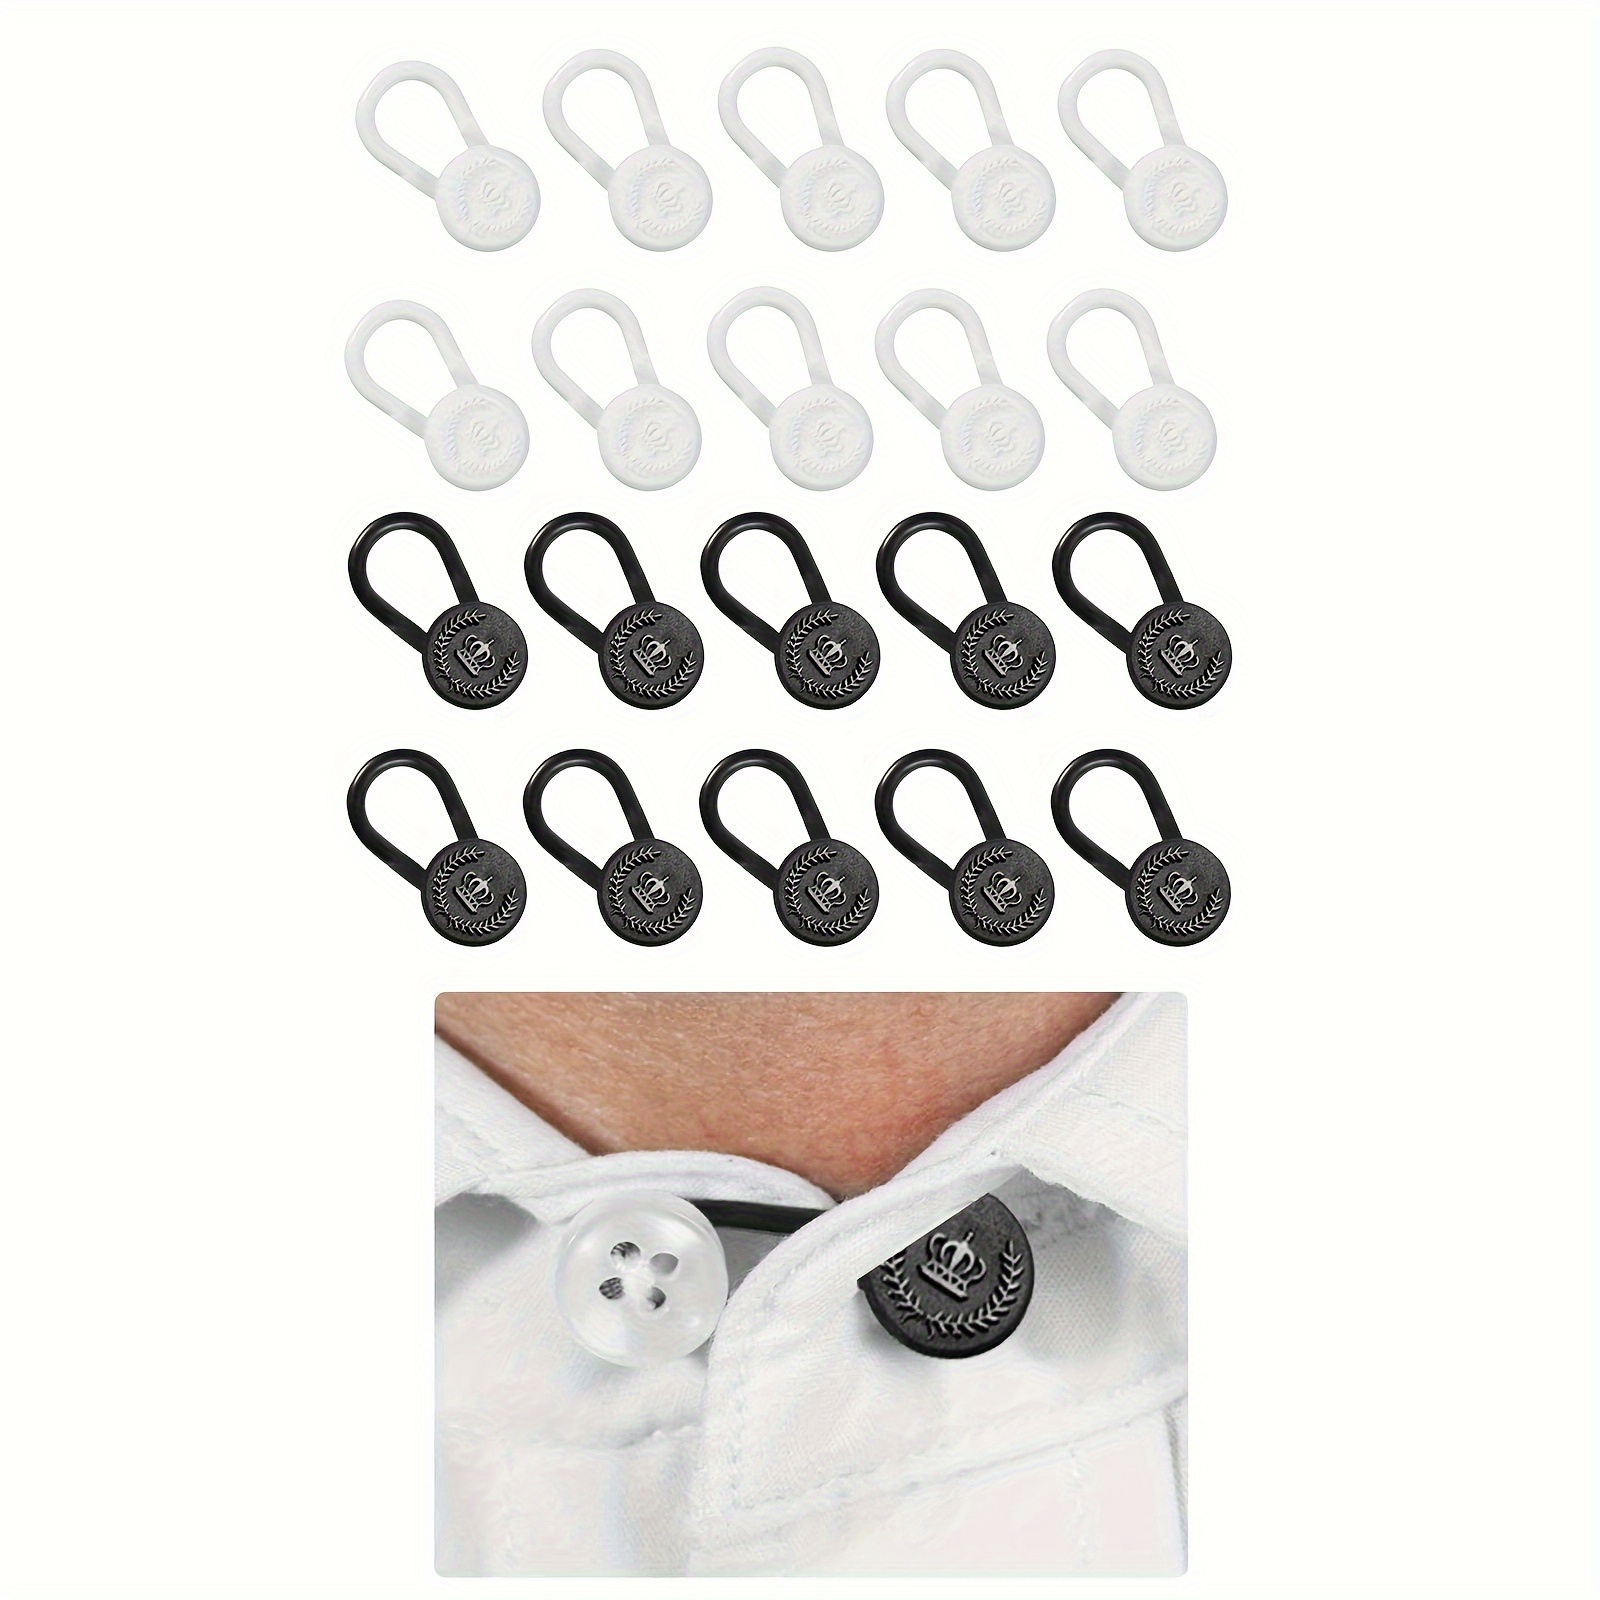 12/8/4Pcs Collar Extenders, Comfy & Premium Invisible Neck